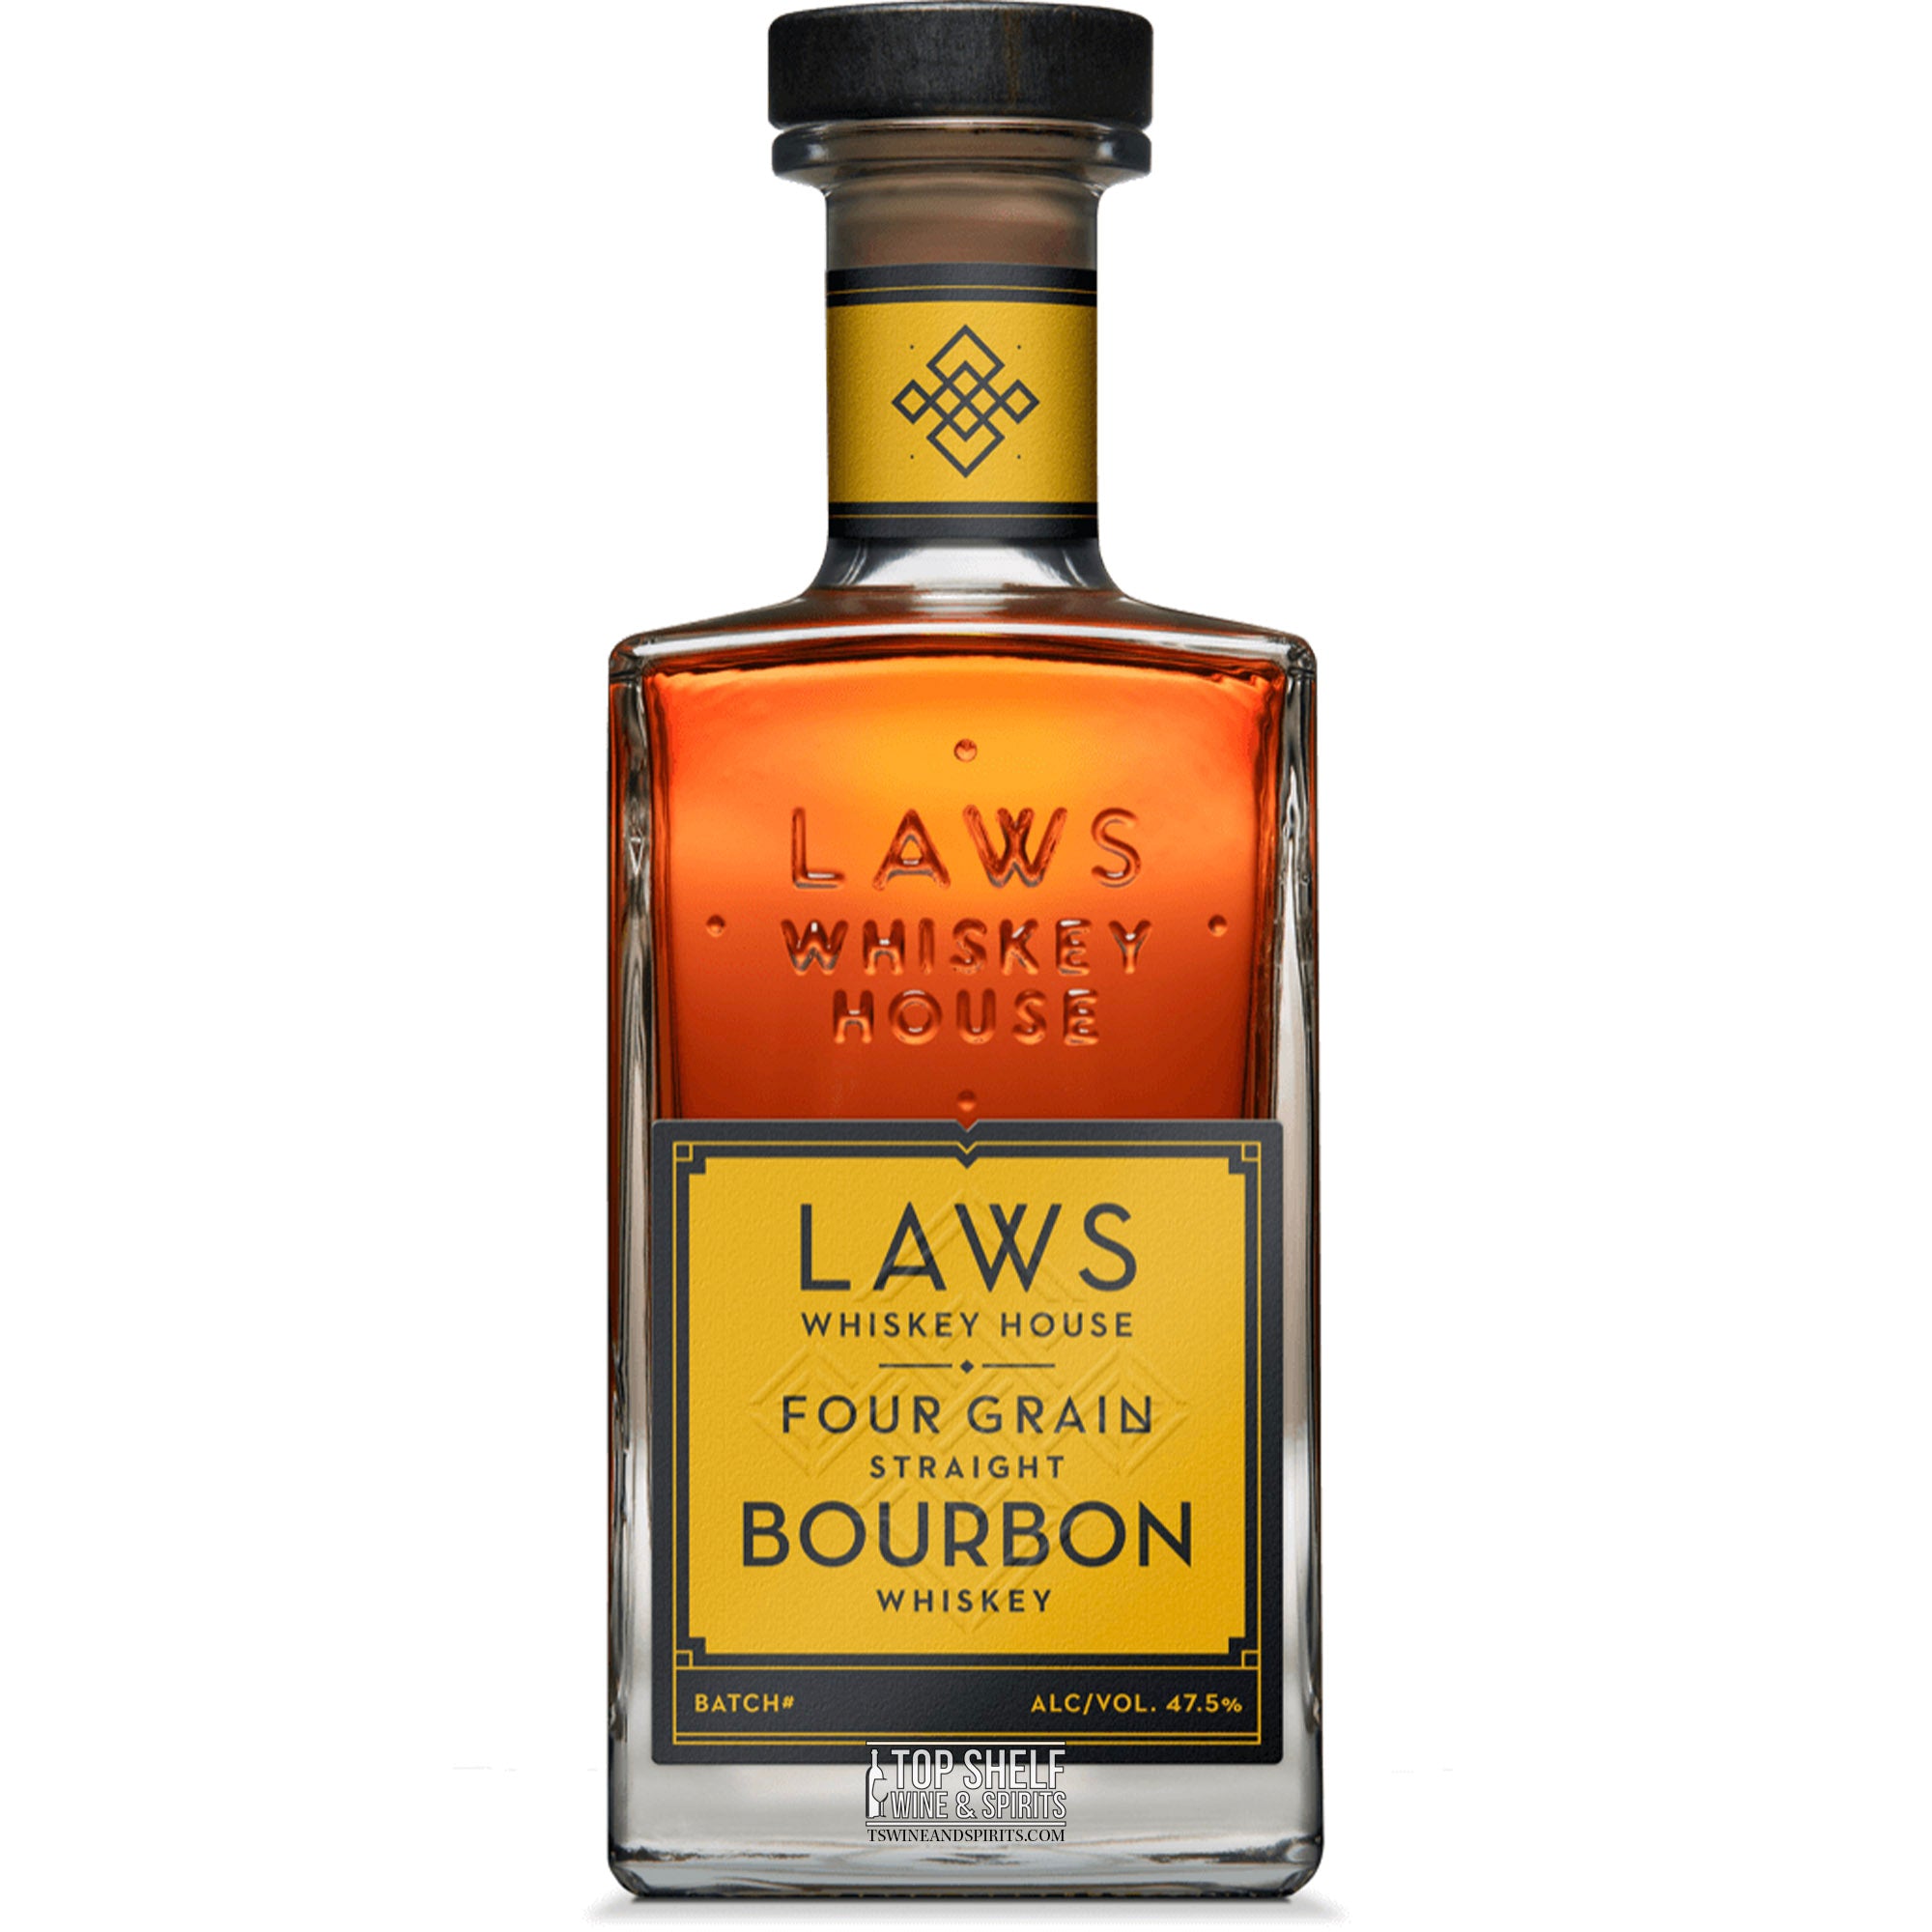 Laws Whiskey House Four Grain Straight Bourbon